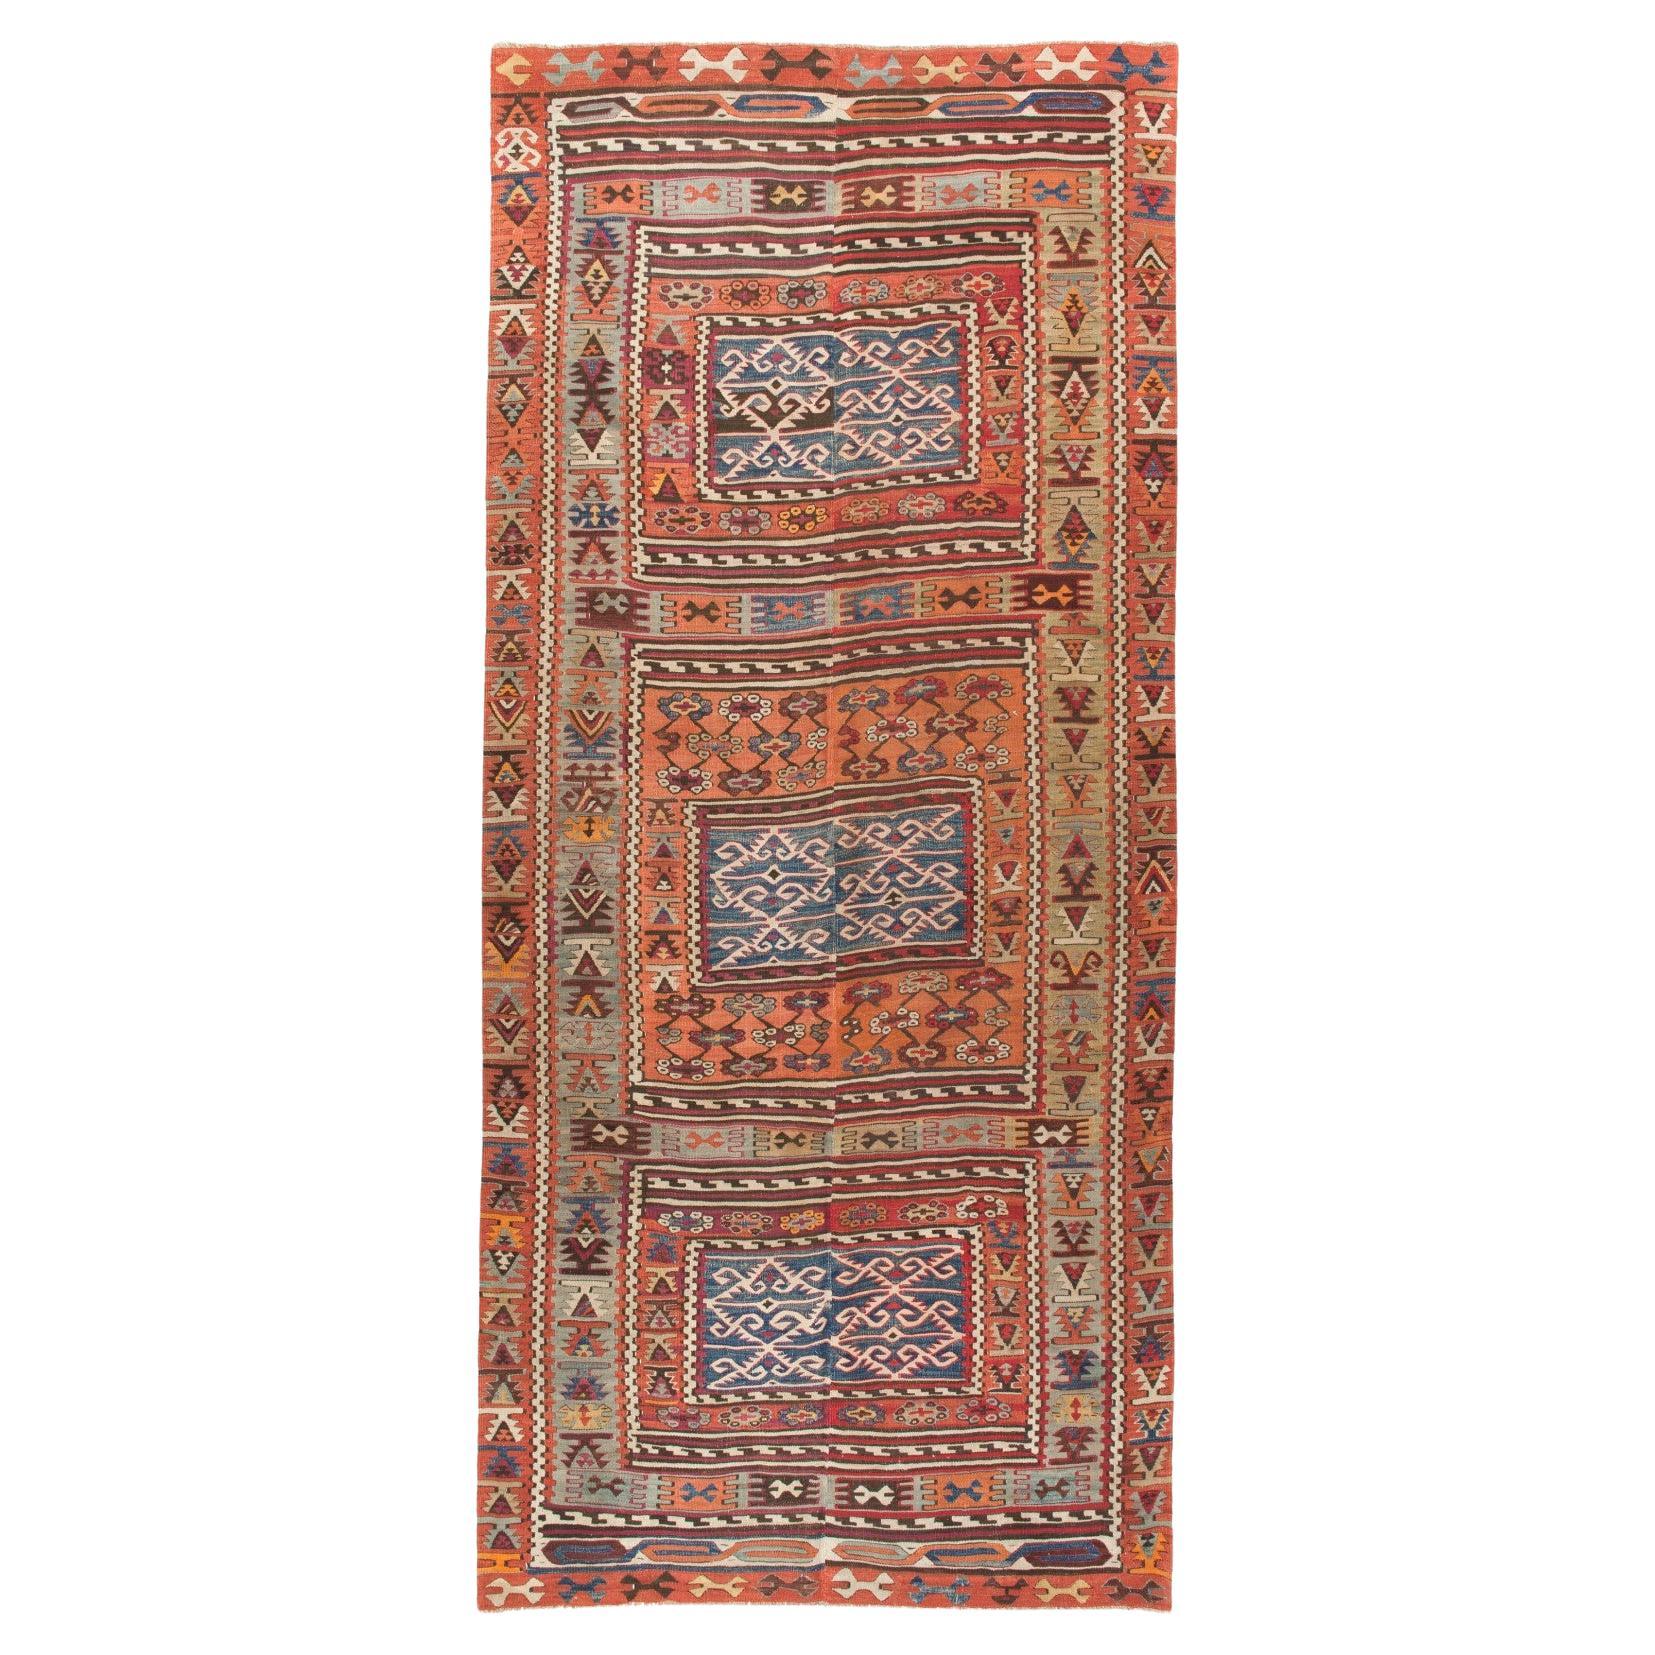 Antique Corum Kilim Rug Wool Old Central Anatolian Turkish Carpet For Sale